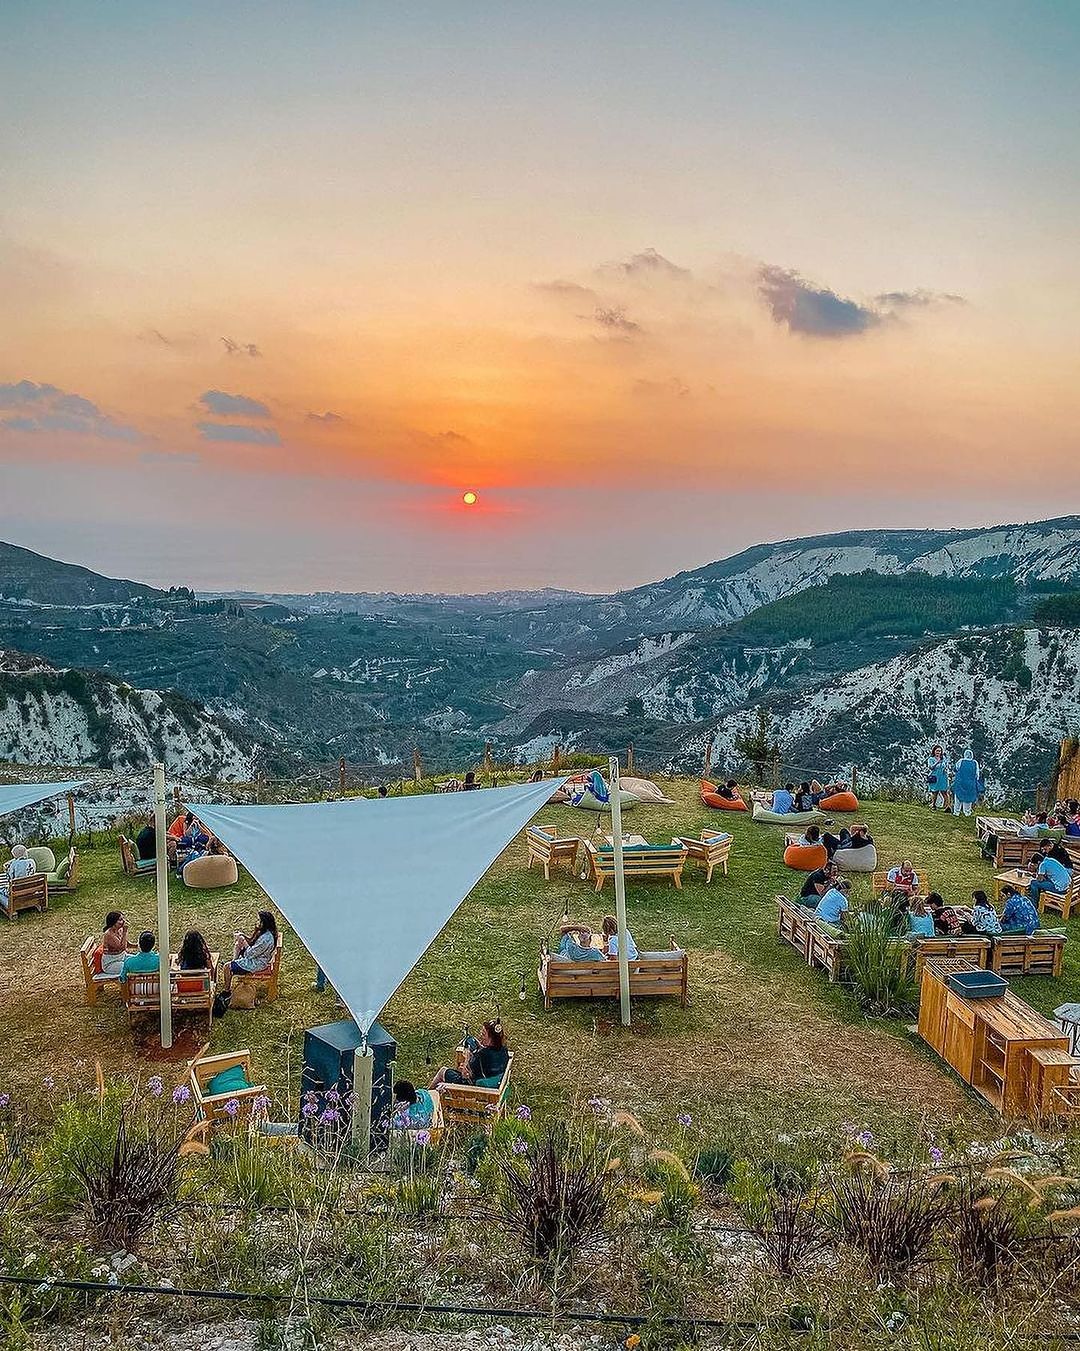 talle-koura-sunset-spots-lebanon-traveler-tourism